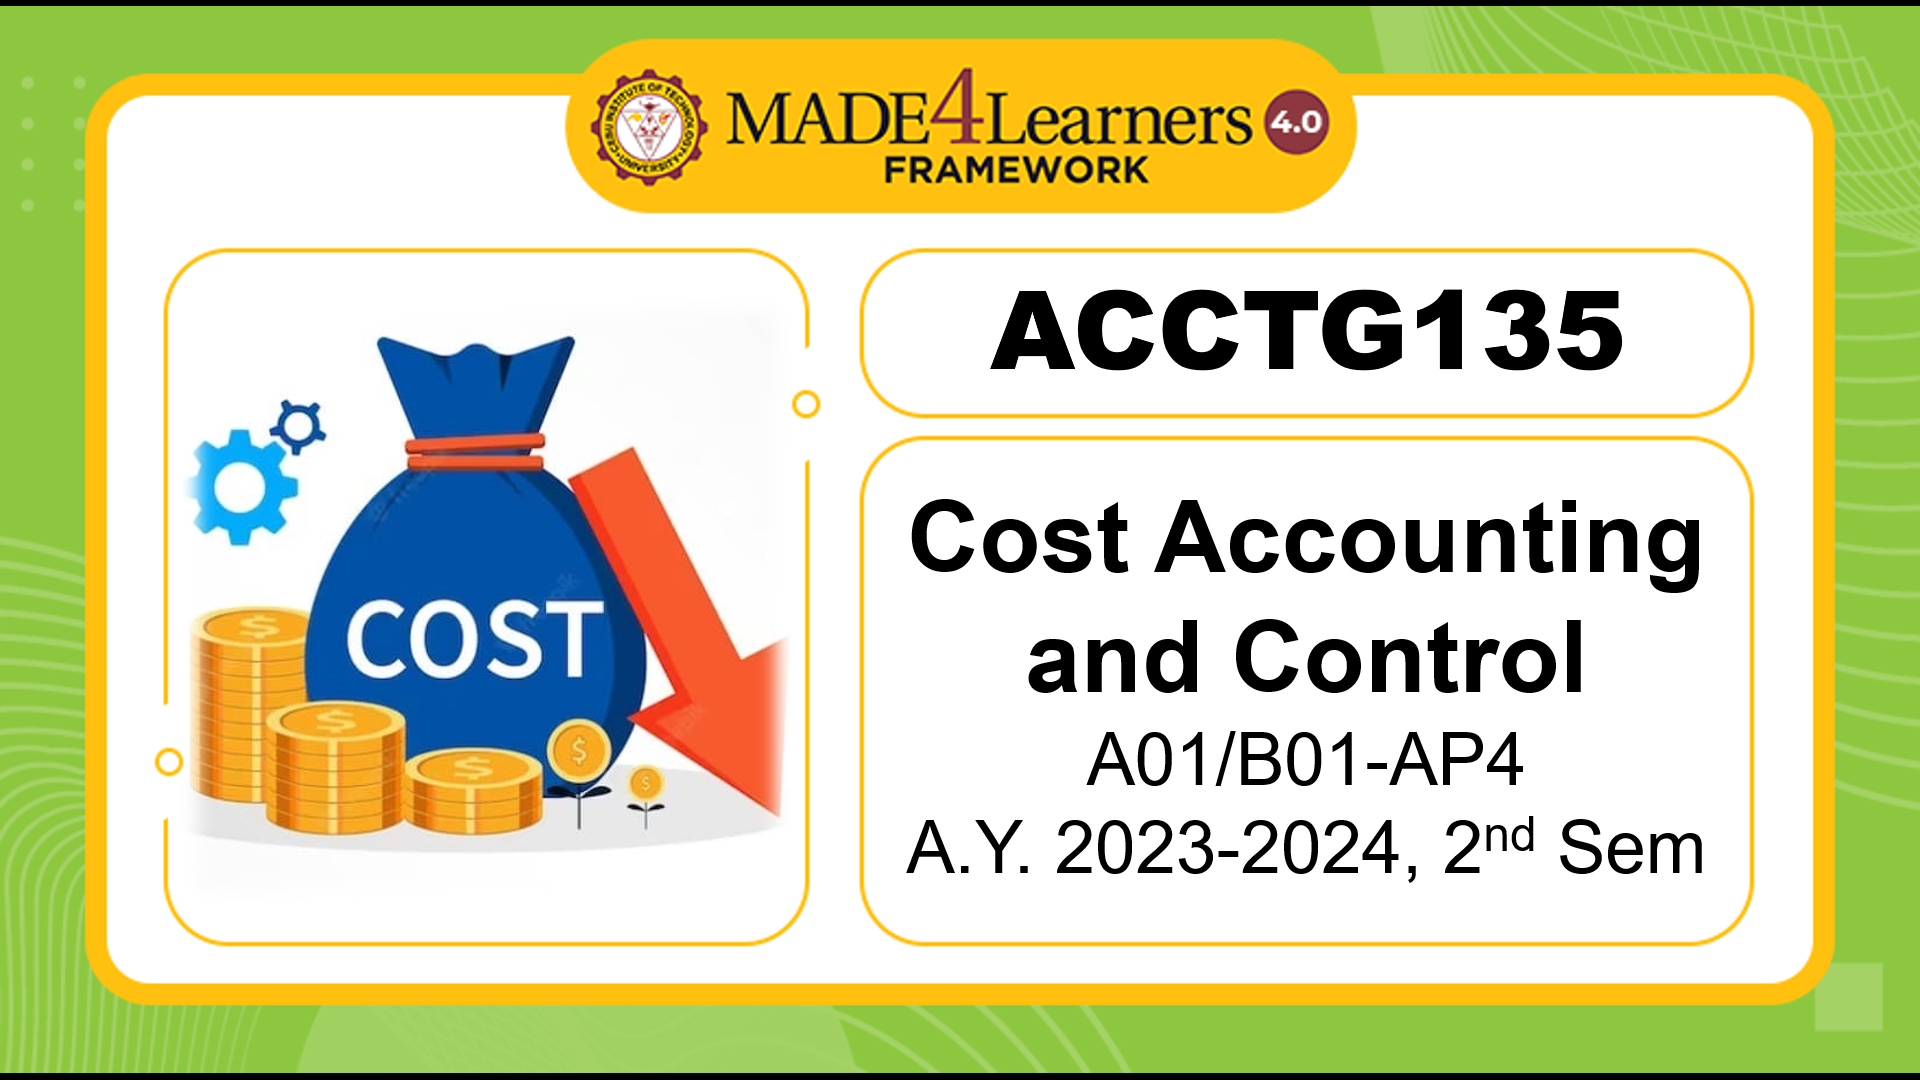 AY23-24 2ndSem ACCTG135 A01/B01-AP4 Cost Accounting and Control